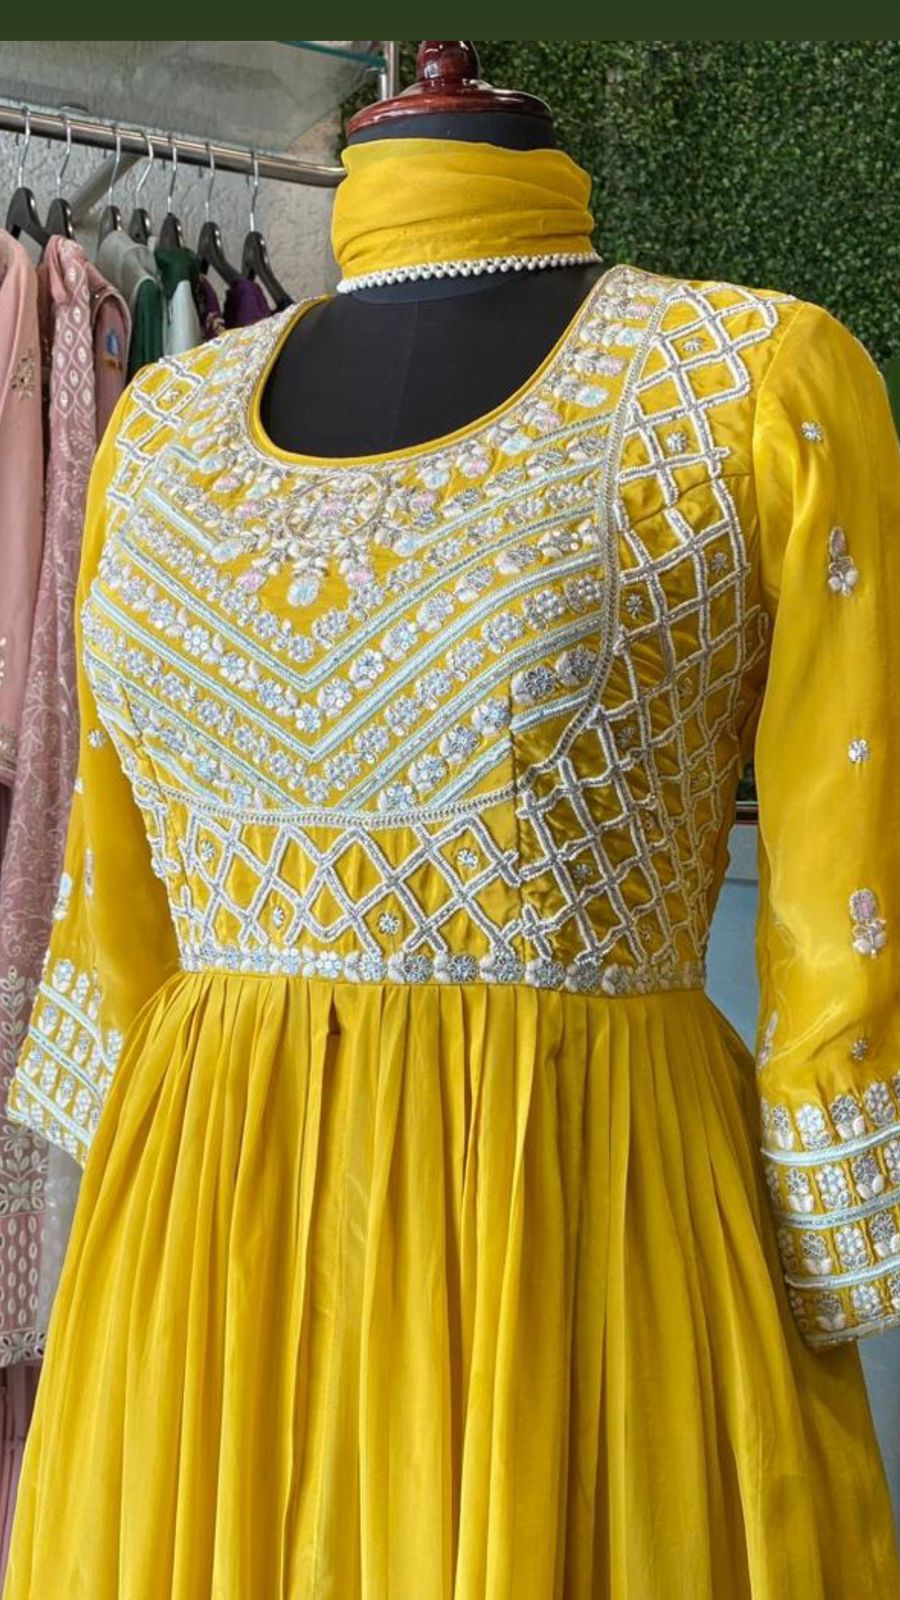 Zenik Yellow Dress Indowestern Dress